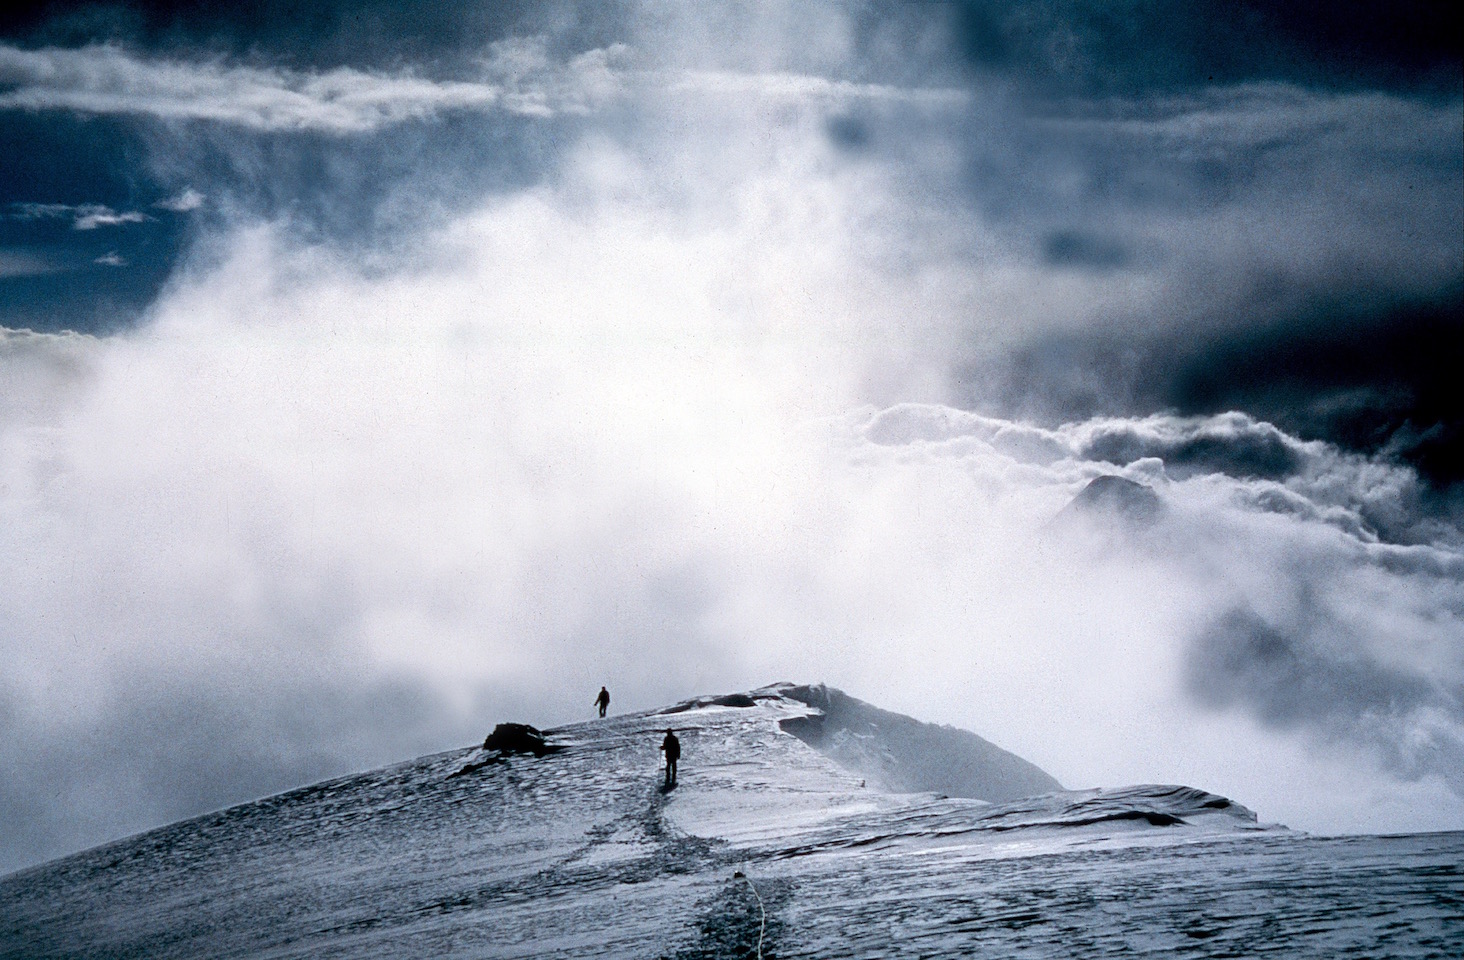 a snowy scene of two people far away hiknig on a glacier